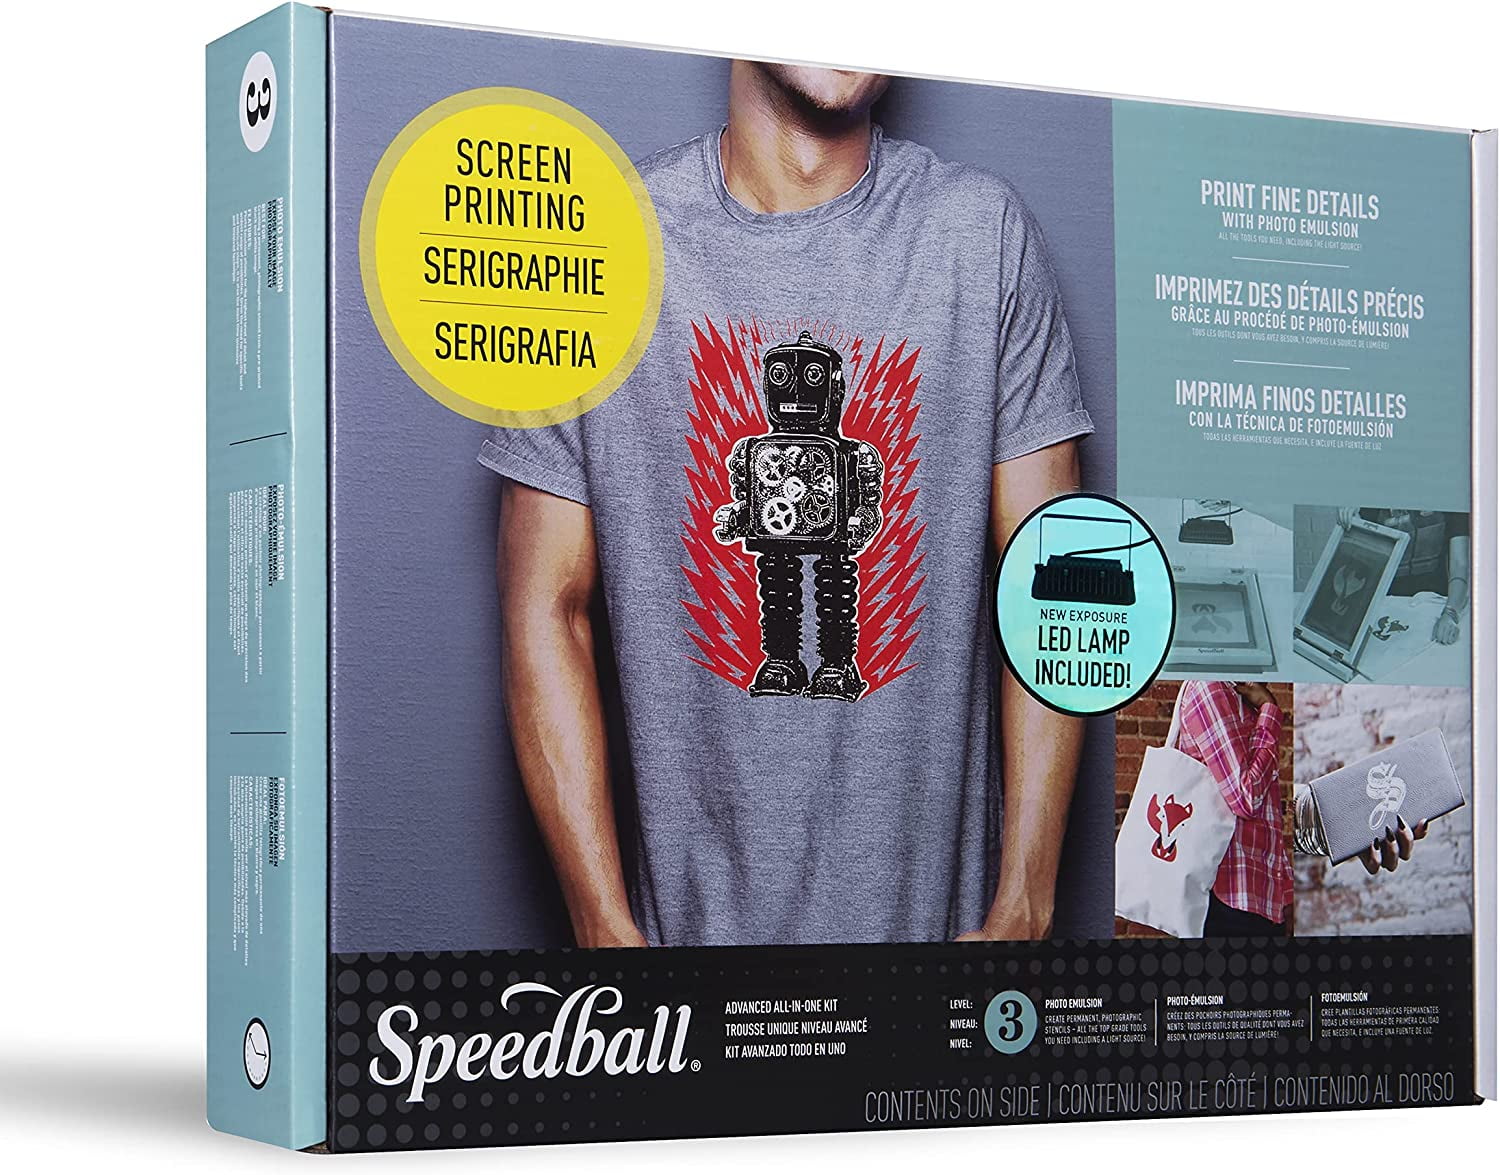 Sammentræf Tilståelse Underholde Speedball Advanced All-In-One Screen Printing Kit, Includes 4 inks in  Black, Red, White, Blue - Walmart.com